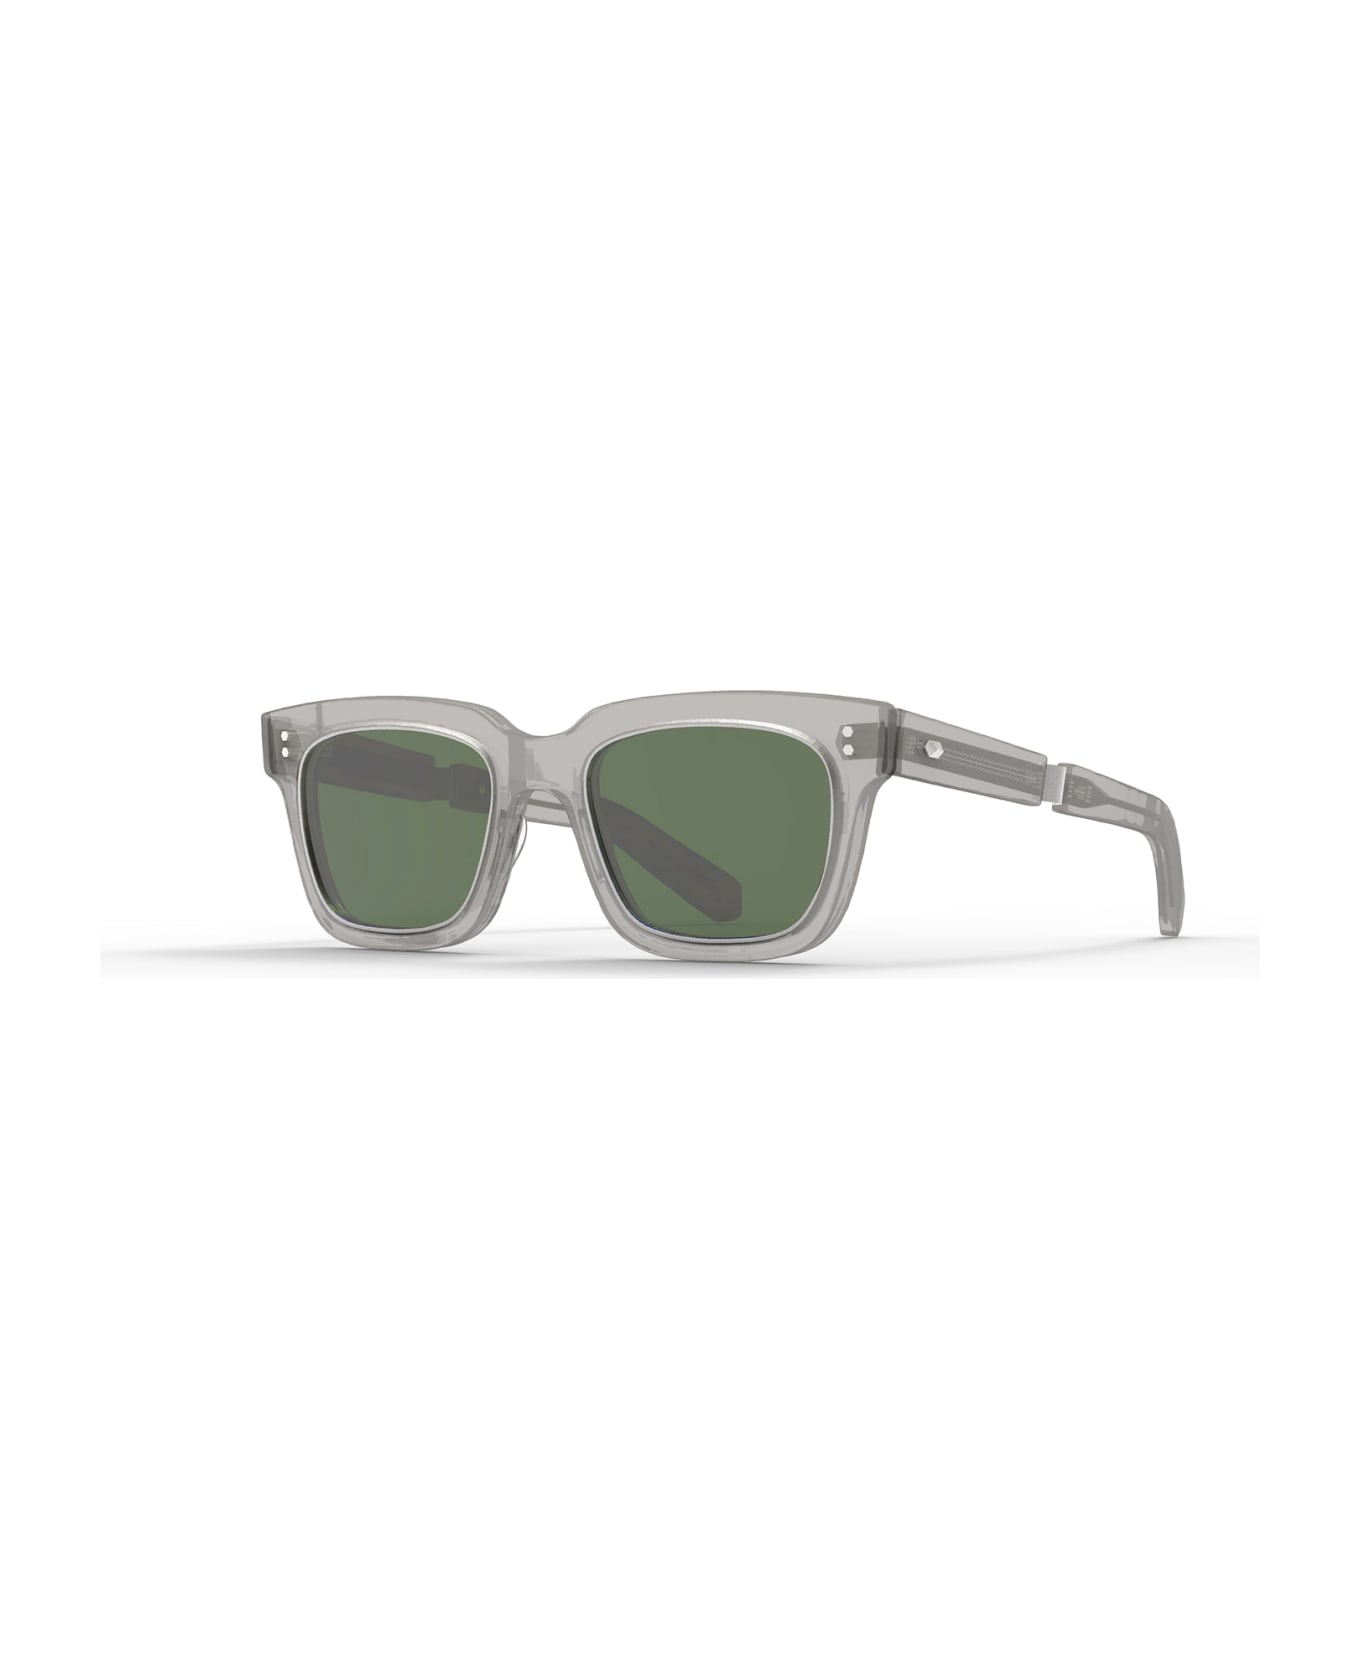 Mr. Leight Arnie S Grey Crystal-matte Platinum Sunglasses - Brown Tortoiseshell Wayfarer Sunglasses